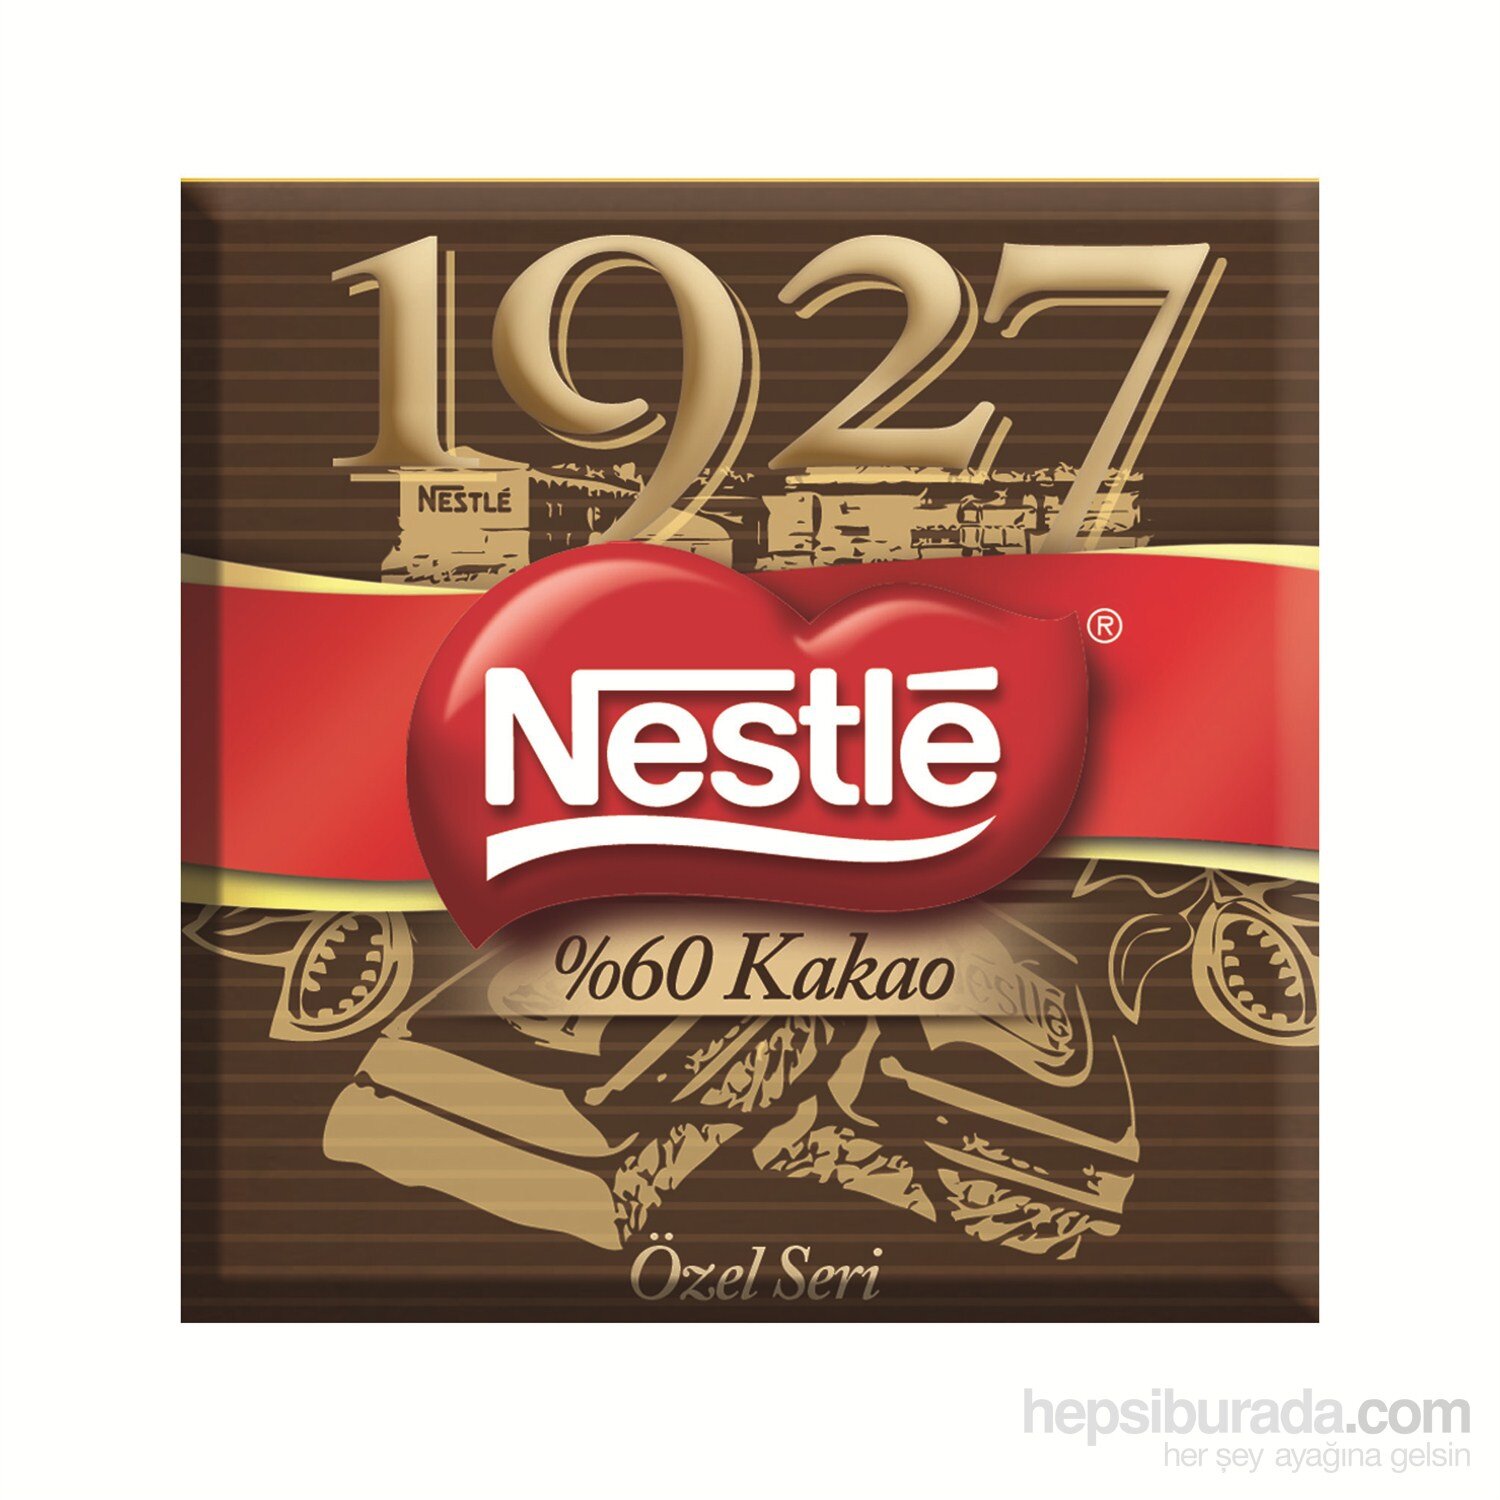 Nestlé 1927 60 Kakao Çikolata 80 gr * 6 adet Fiyatı